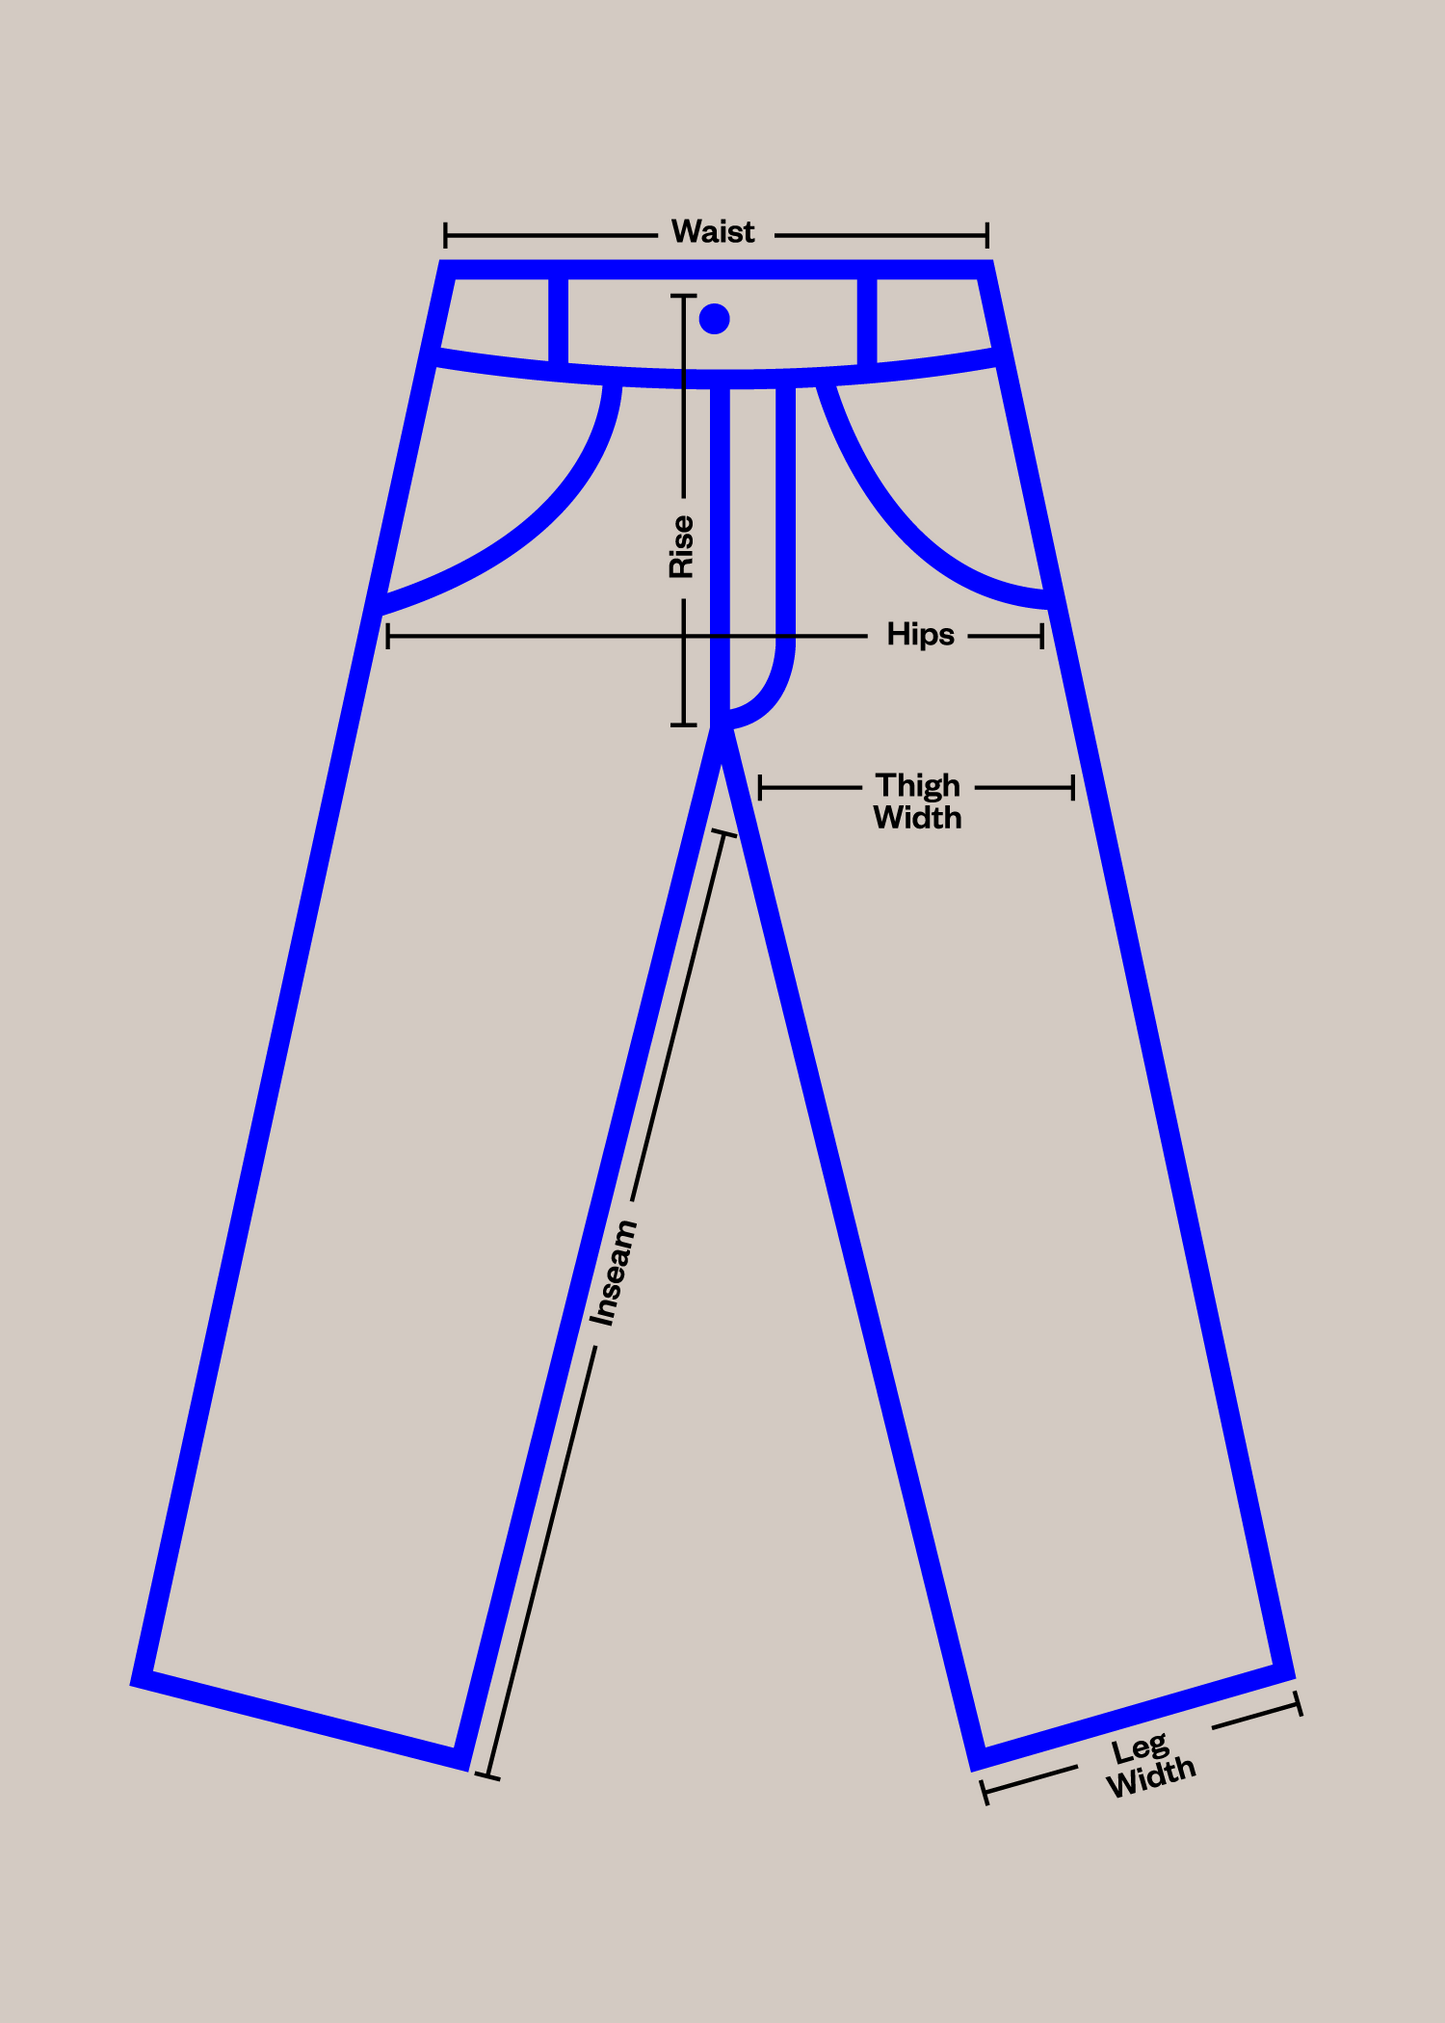 1970s Plaid Pattern Wool Trouser Pants Size Women's 25 Men's 28